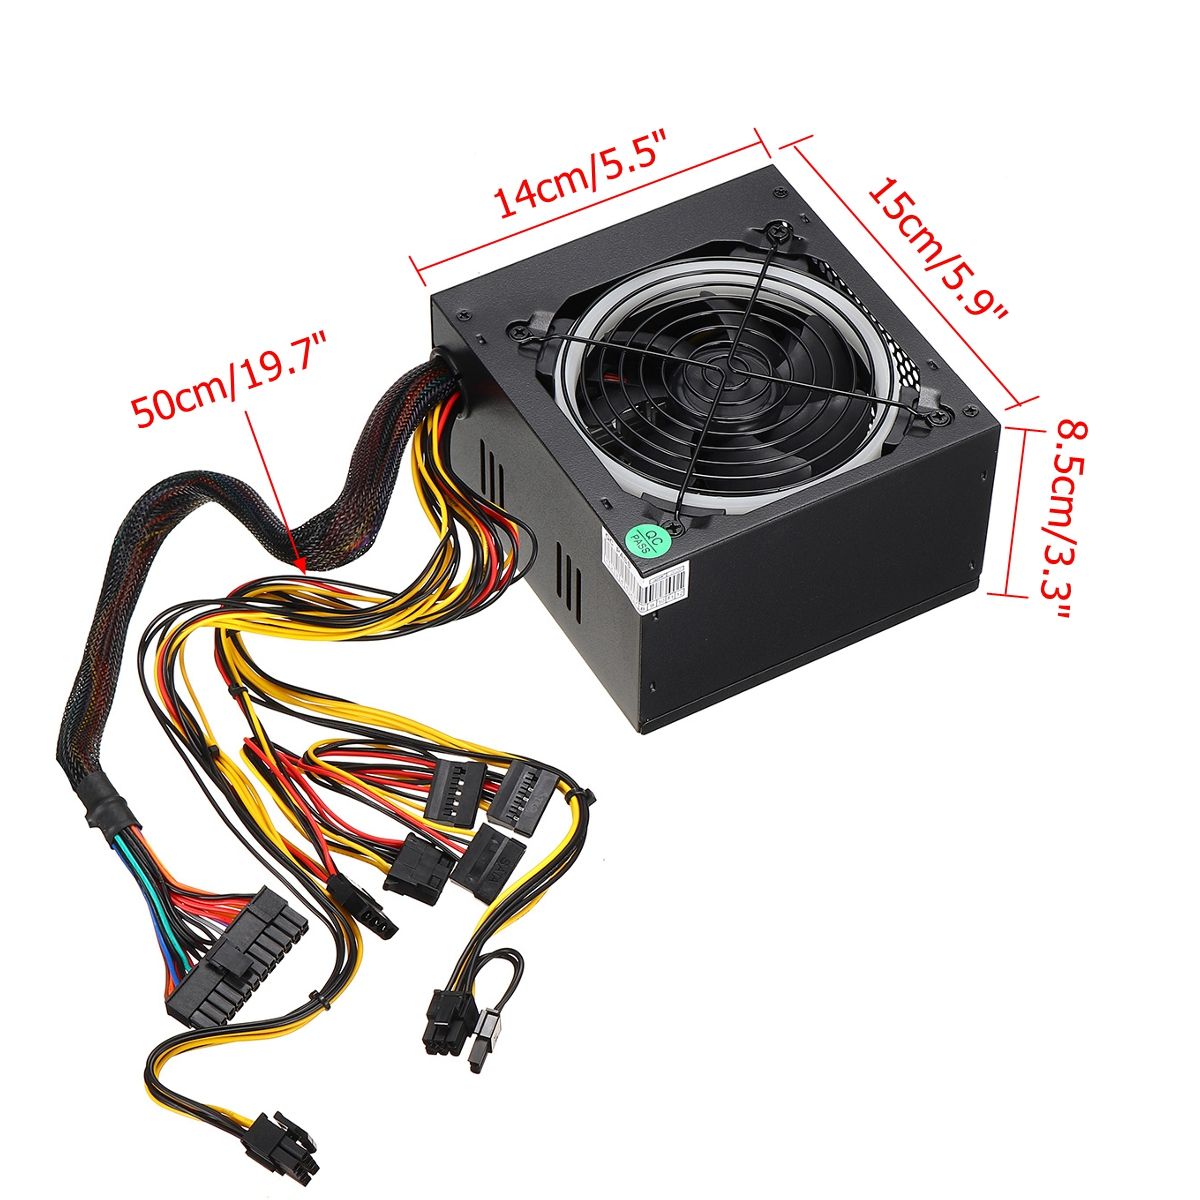 500W-Computer-Power-Supply-ATX-12V-Gaming-PSU-Multicolor-LED-RGB-Fan-24-Pin-AU-1660524